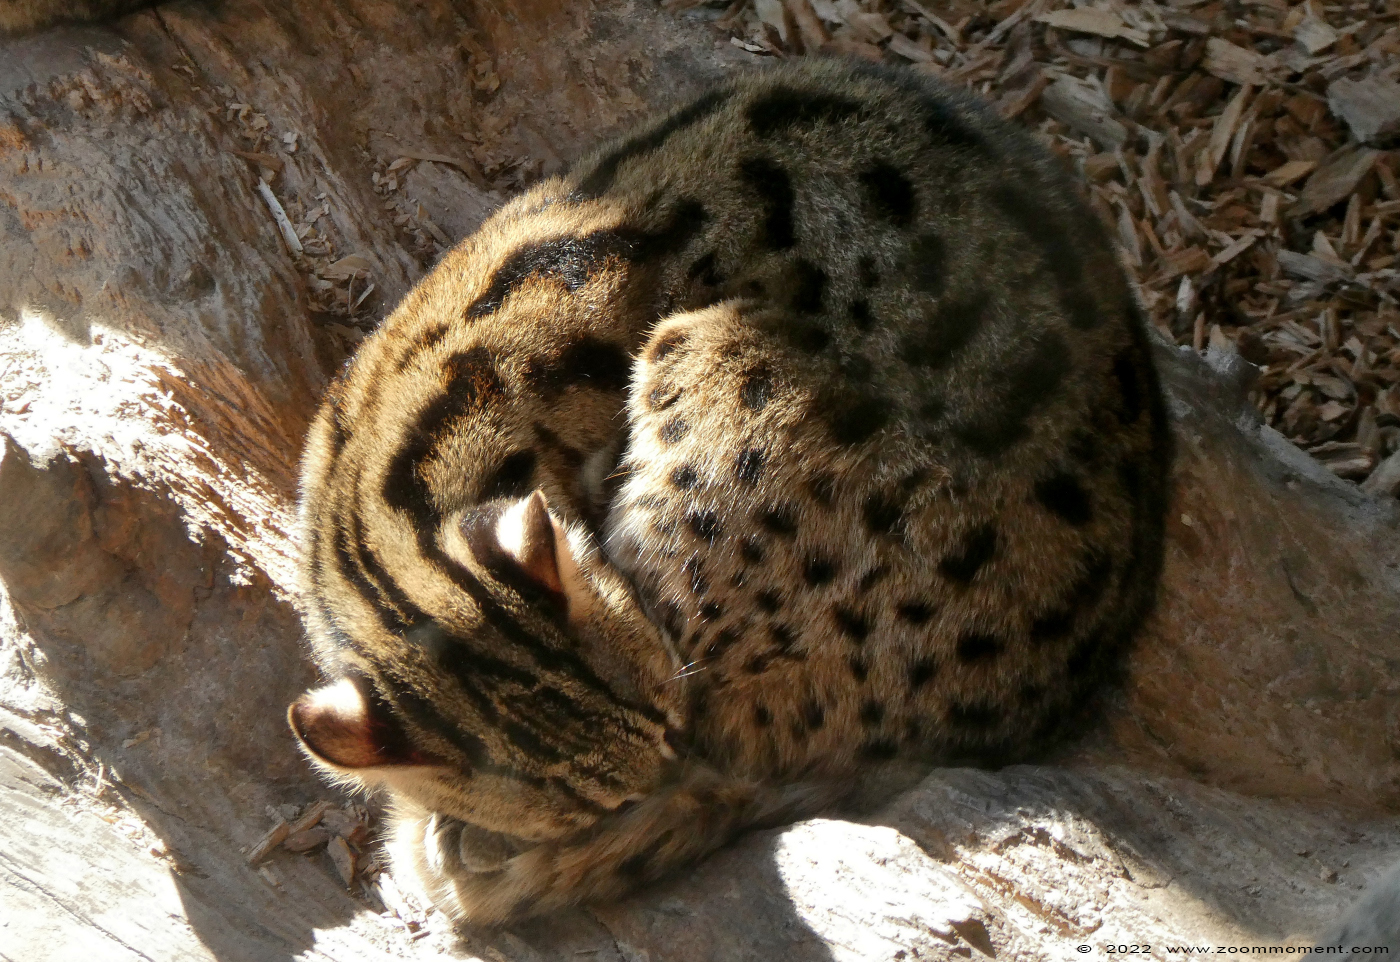 Bengaalse tijgerkat ( Prionailurus bengalensis ) leopard cat Bengalkatze
Trefwoorden: Monde Sauvage Belgium Bengaalse tijgerkat Prionailurus bengalensis leopard cat Bengalkatze